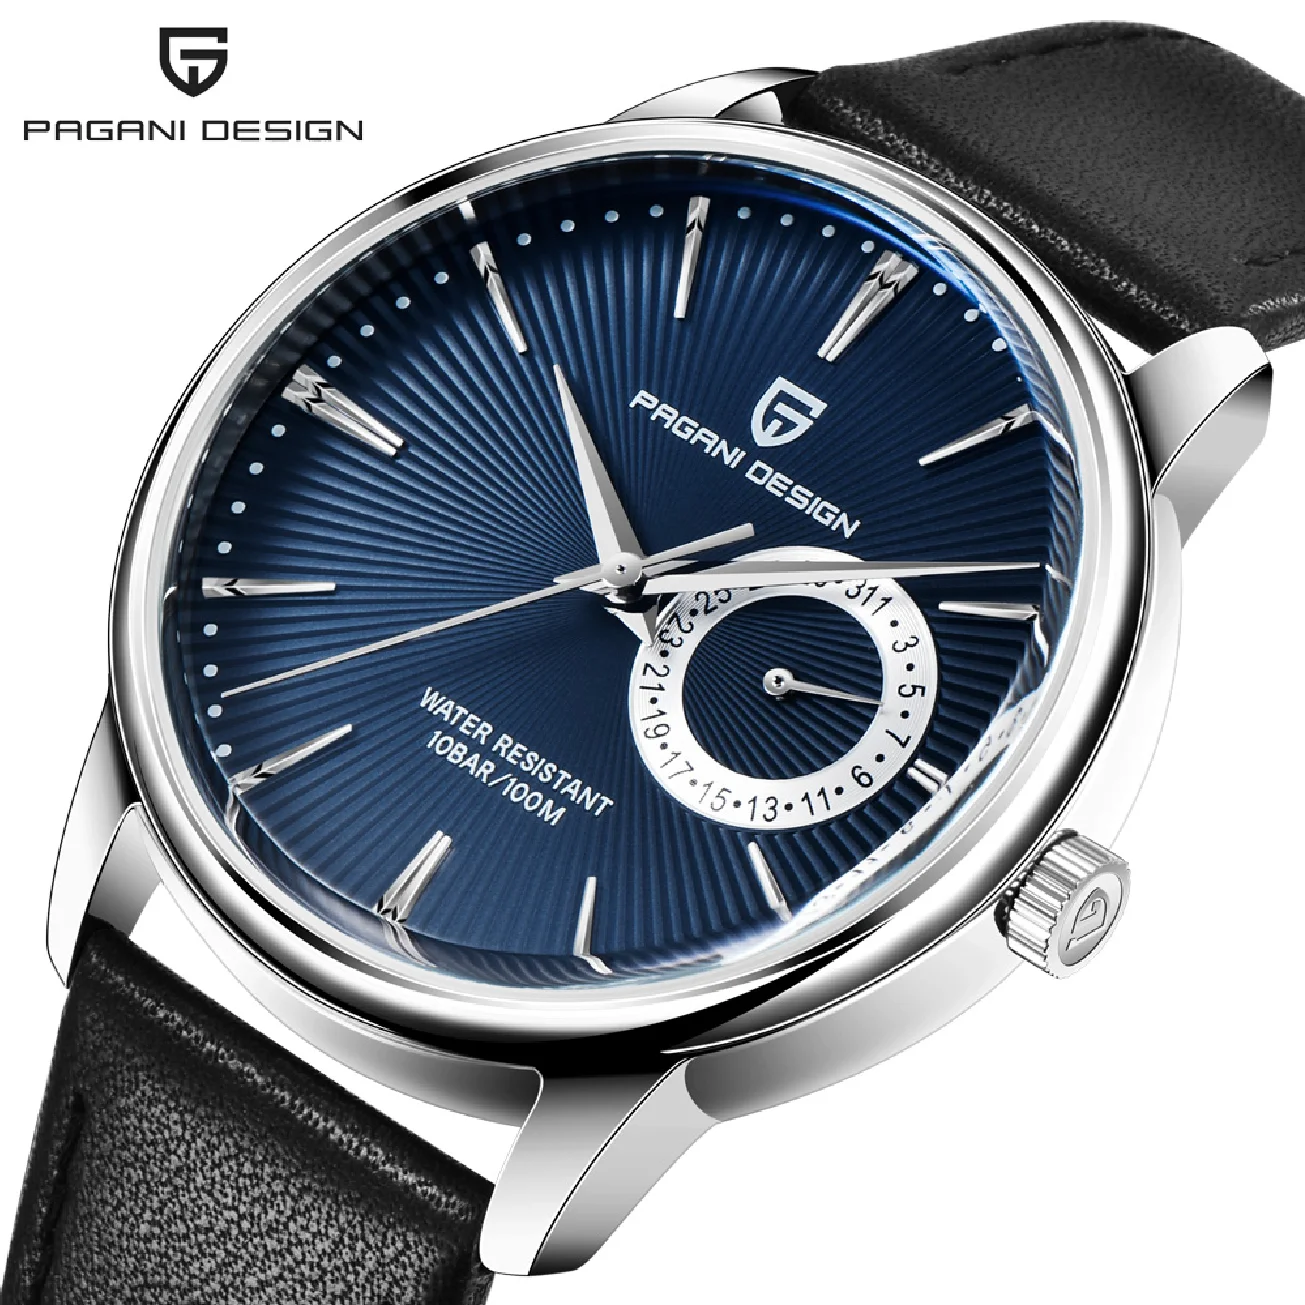 

2020 New PAGANI DESIGN Men's Watches Top Brand Luxury Quartz Watch Men Leather 100M Waterproof Military Watch Men relojes hombre